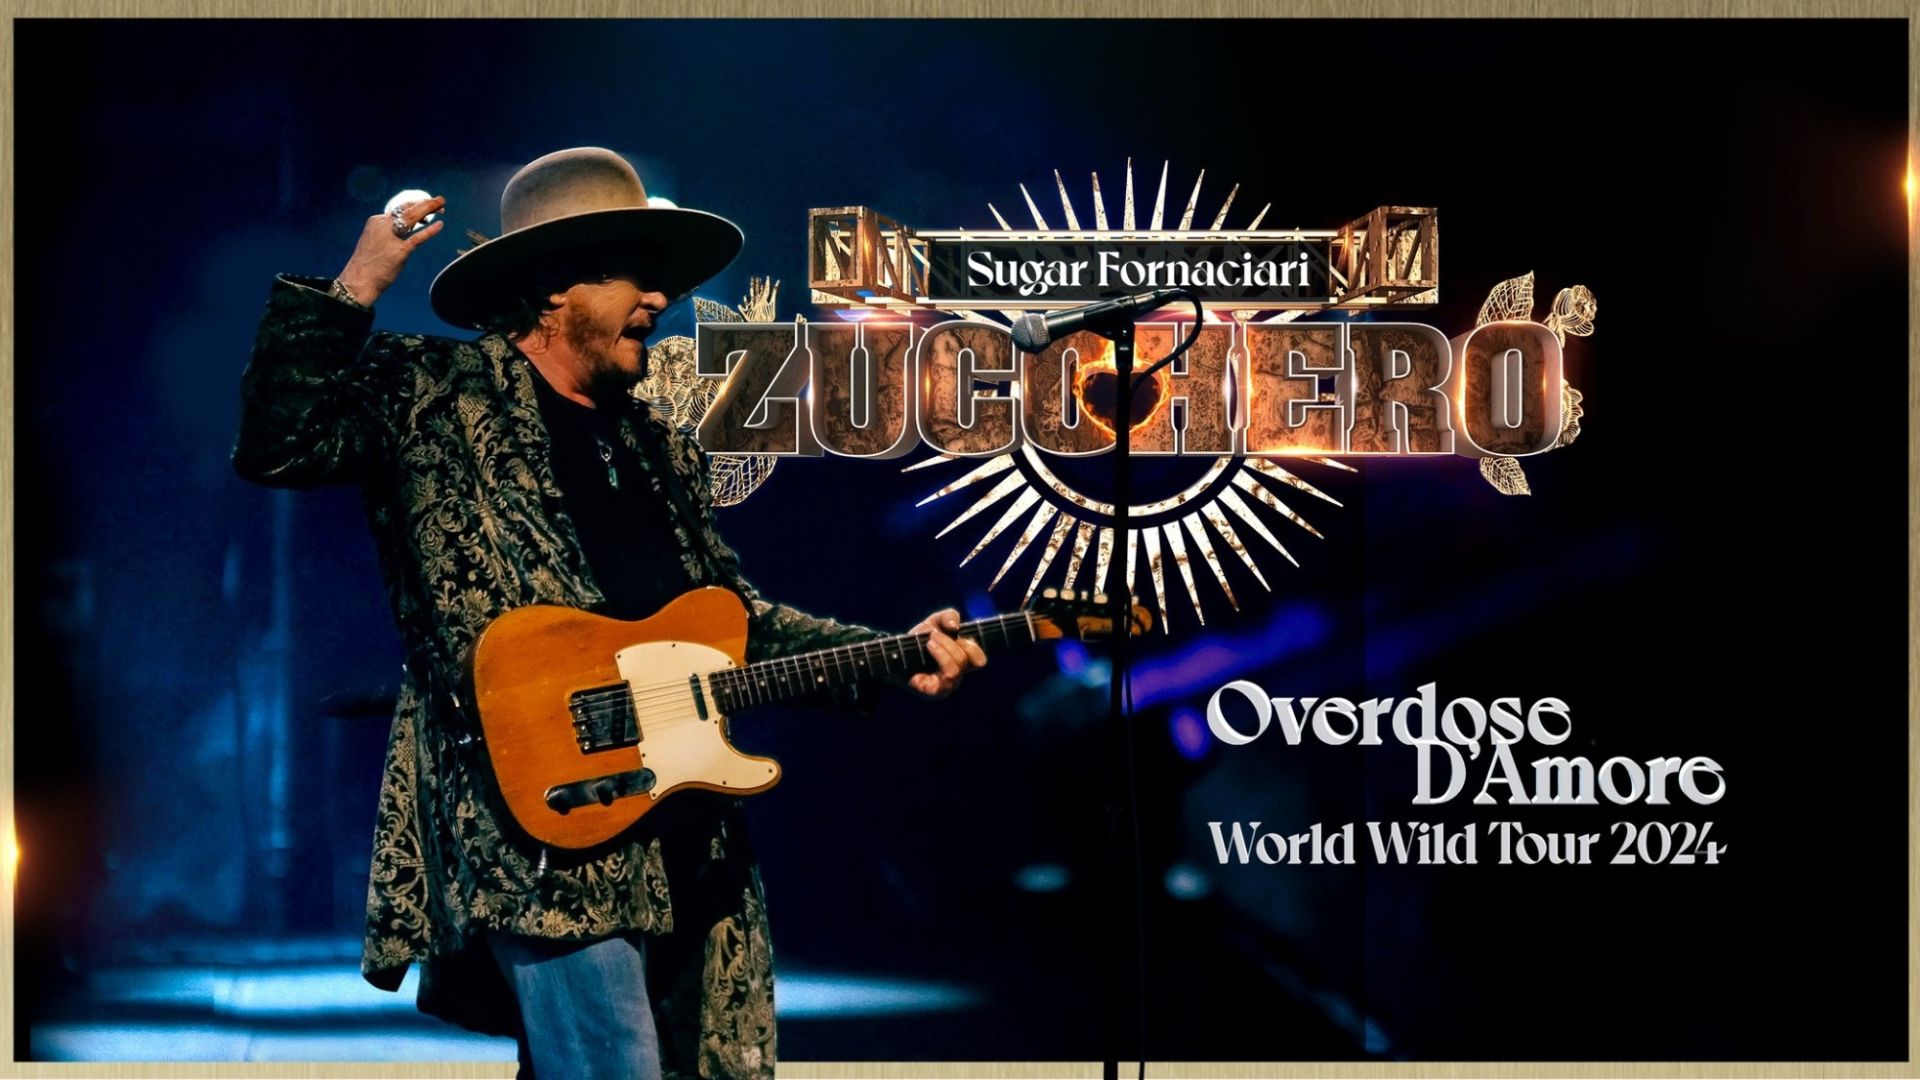 Zucchero "Overdose D'amore World Wild Tour"